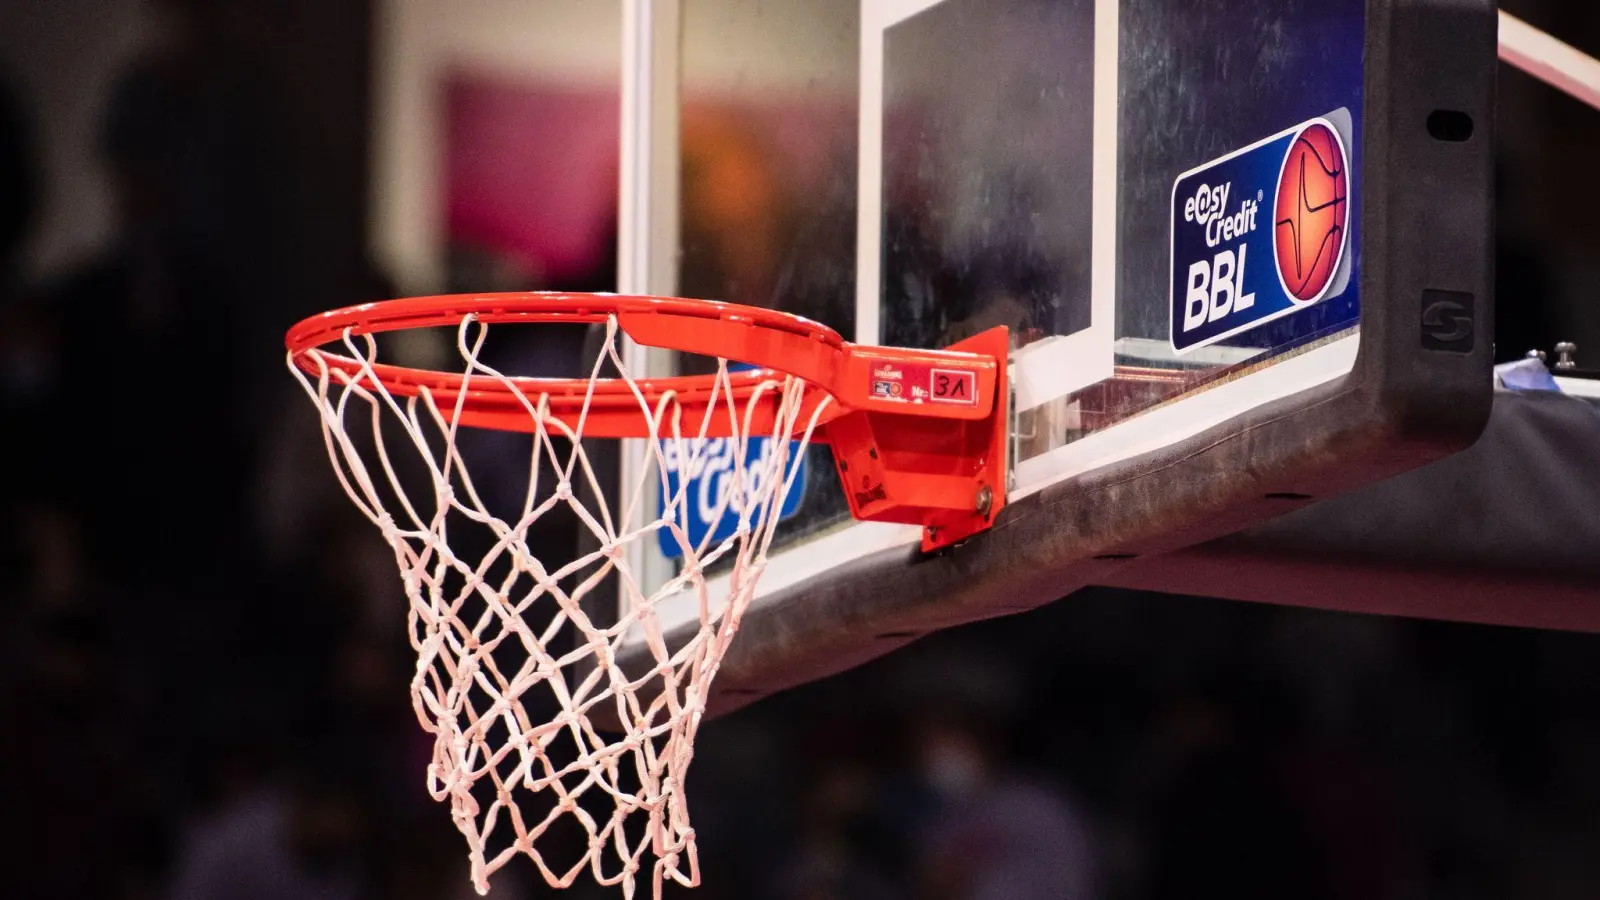 Ein easyCredit BBL-Logo klebt neben dem Basketballkorb. (Foto: Marius Becker/dpa)